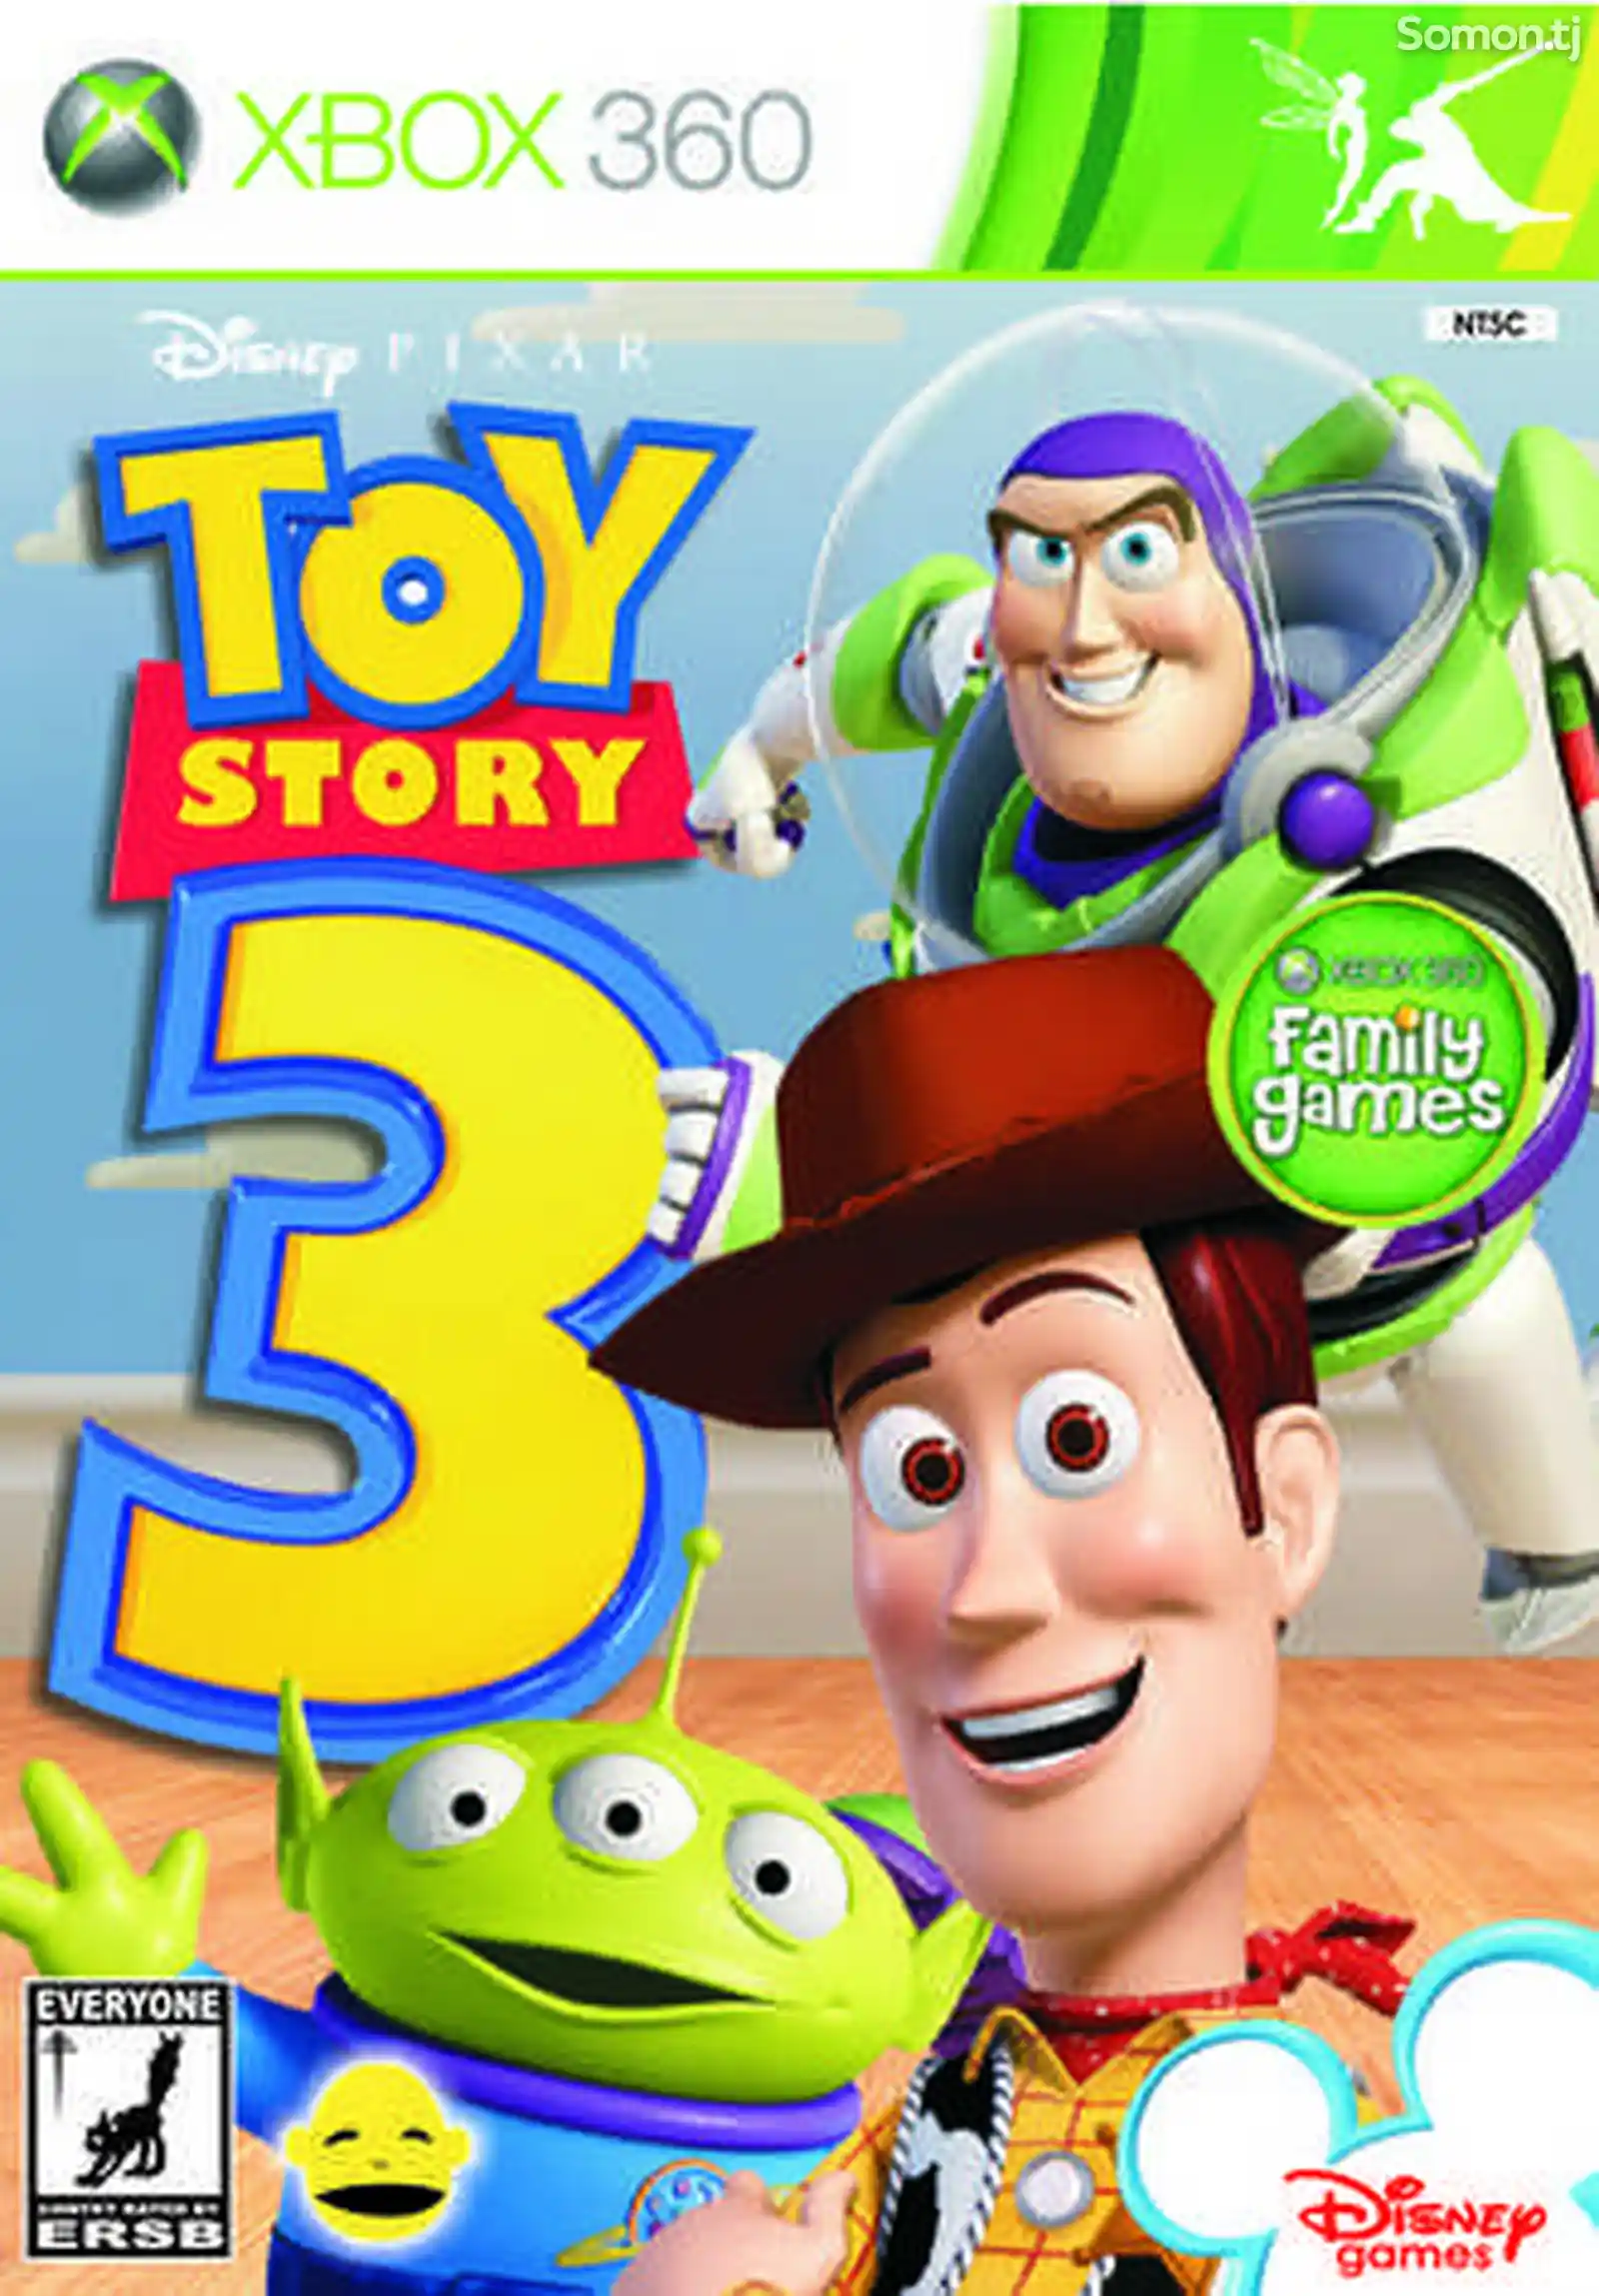 Игра Toy story 3 для прошитых Xbox 360